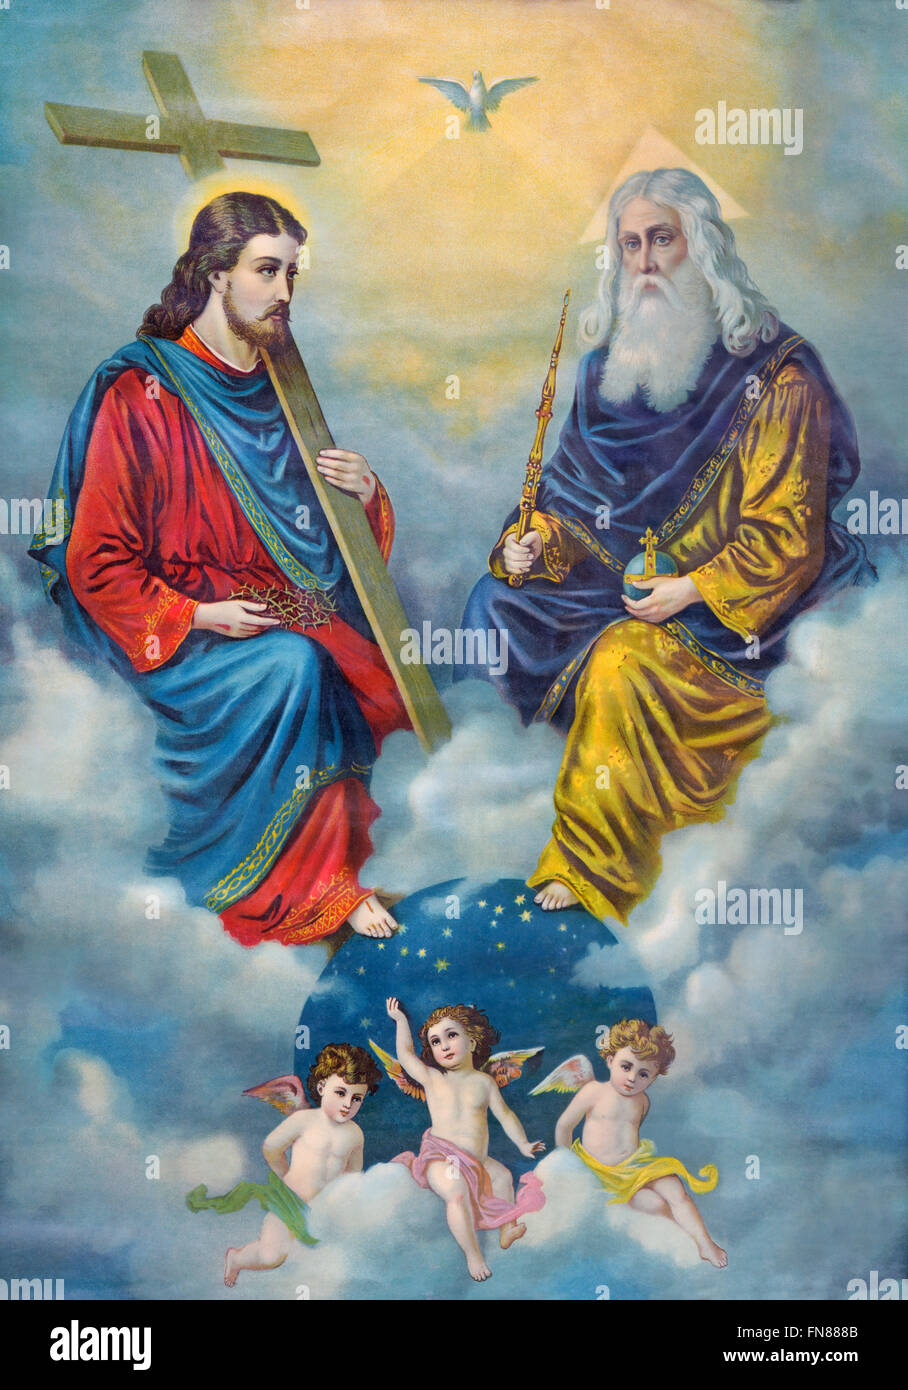 SEBECHLEBY, SLOVAKIA - FEBRUARY 27, 2016: Typical catholic image of Holy Trinity printed in Germany. Stock Photo